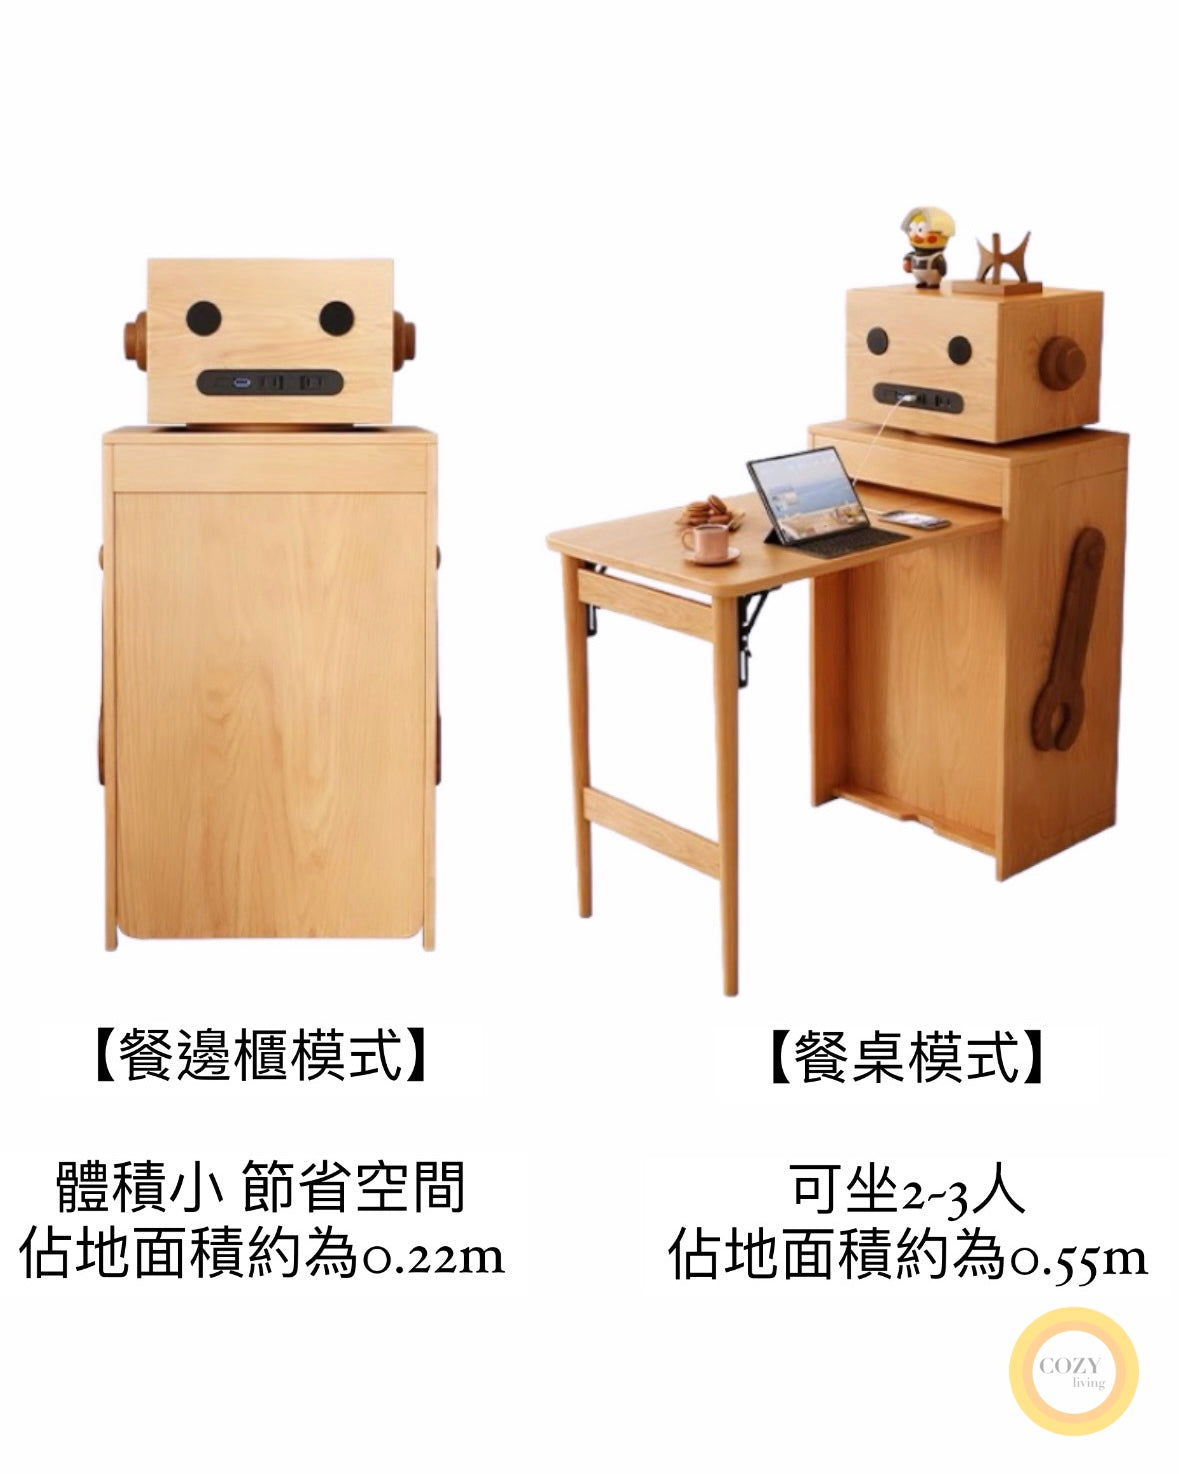 Habib robot solid wood folding dining table 